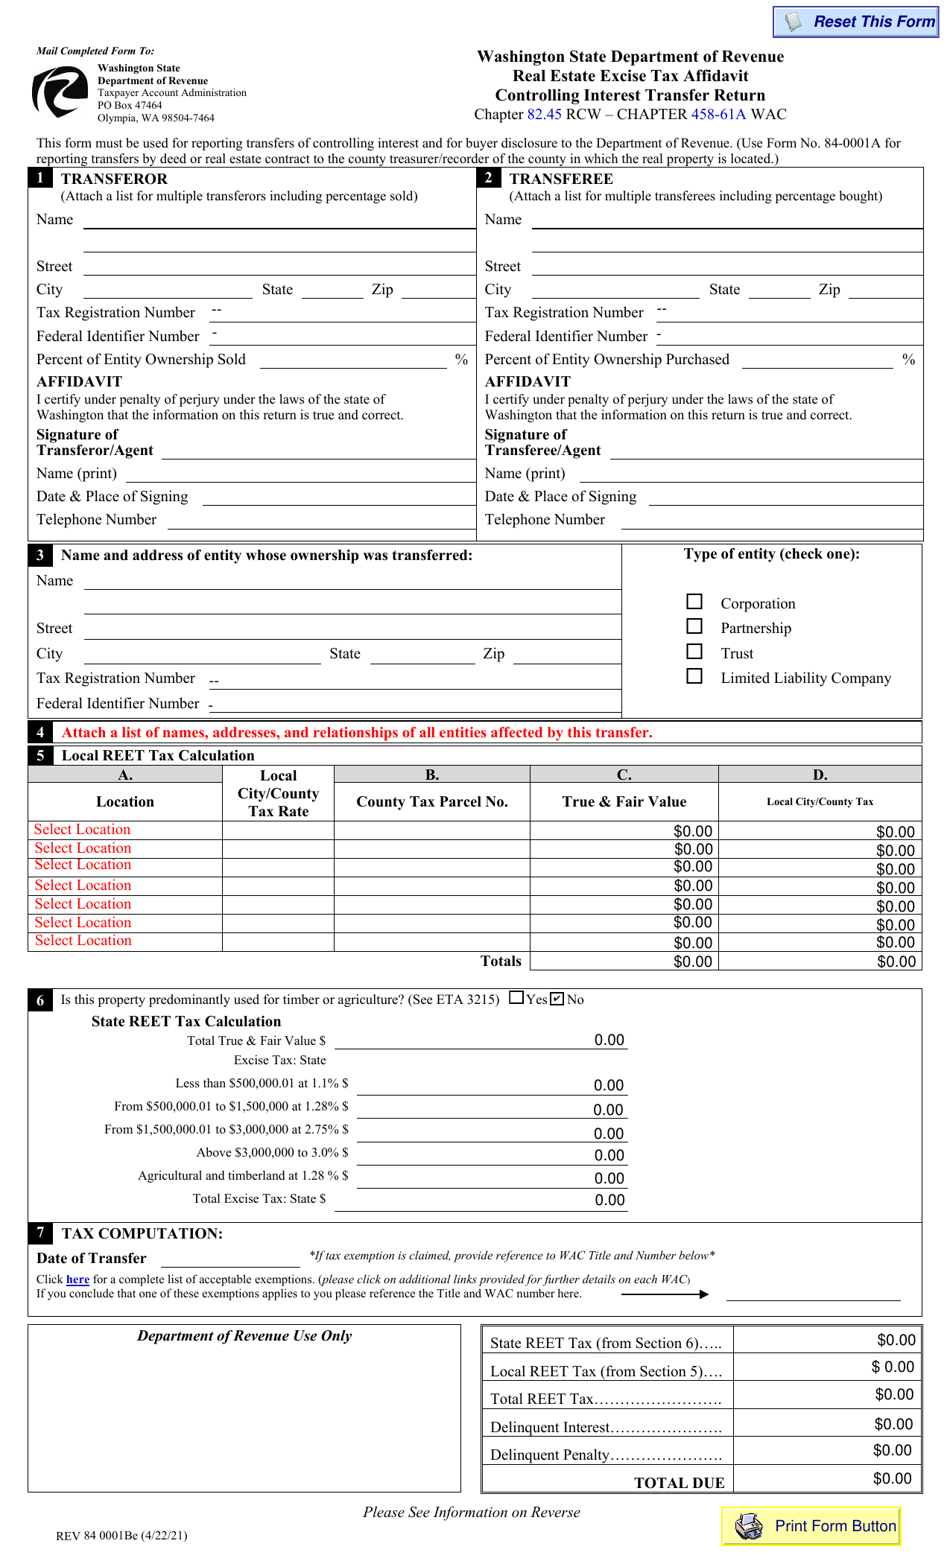 Form REV84 0001BE Real Estate Excise Tax Affidavit Controlling Interest Transfer Return - Washington, Page 1